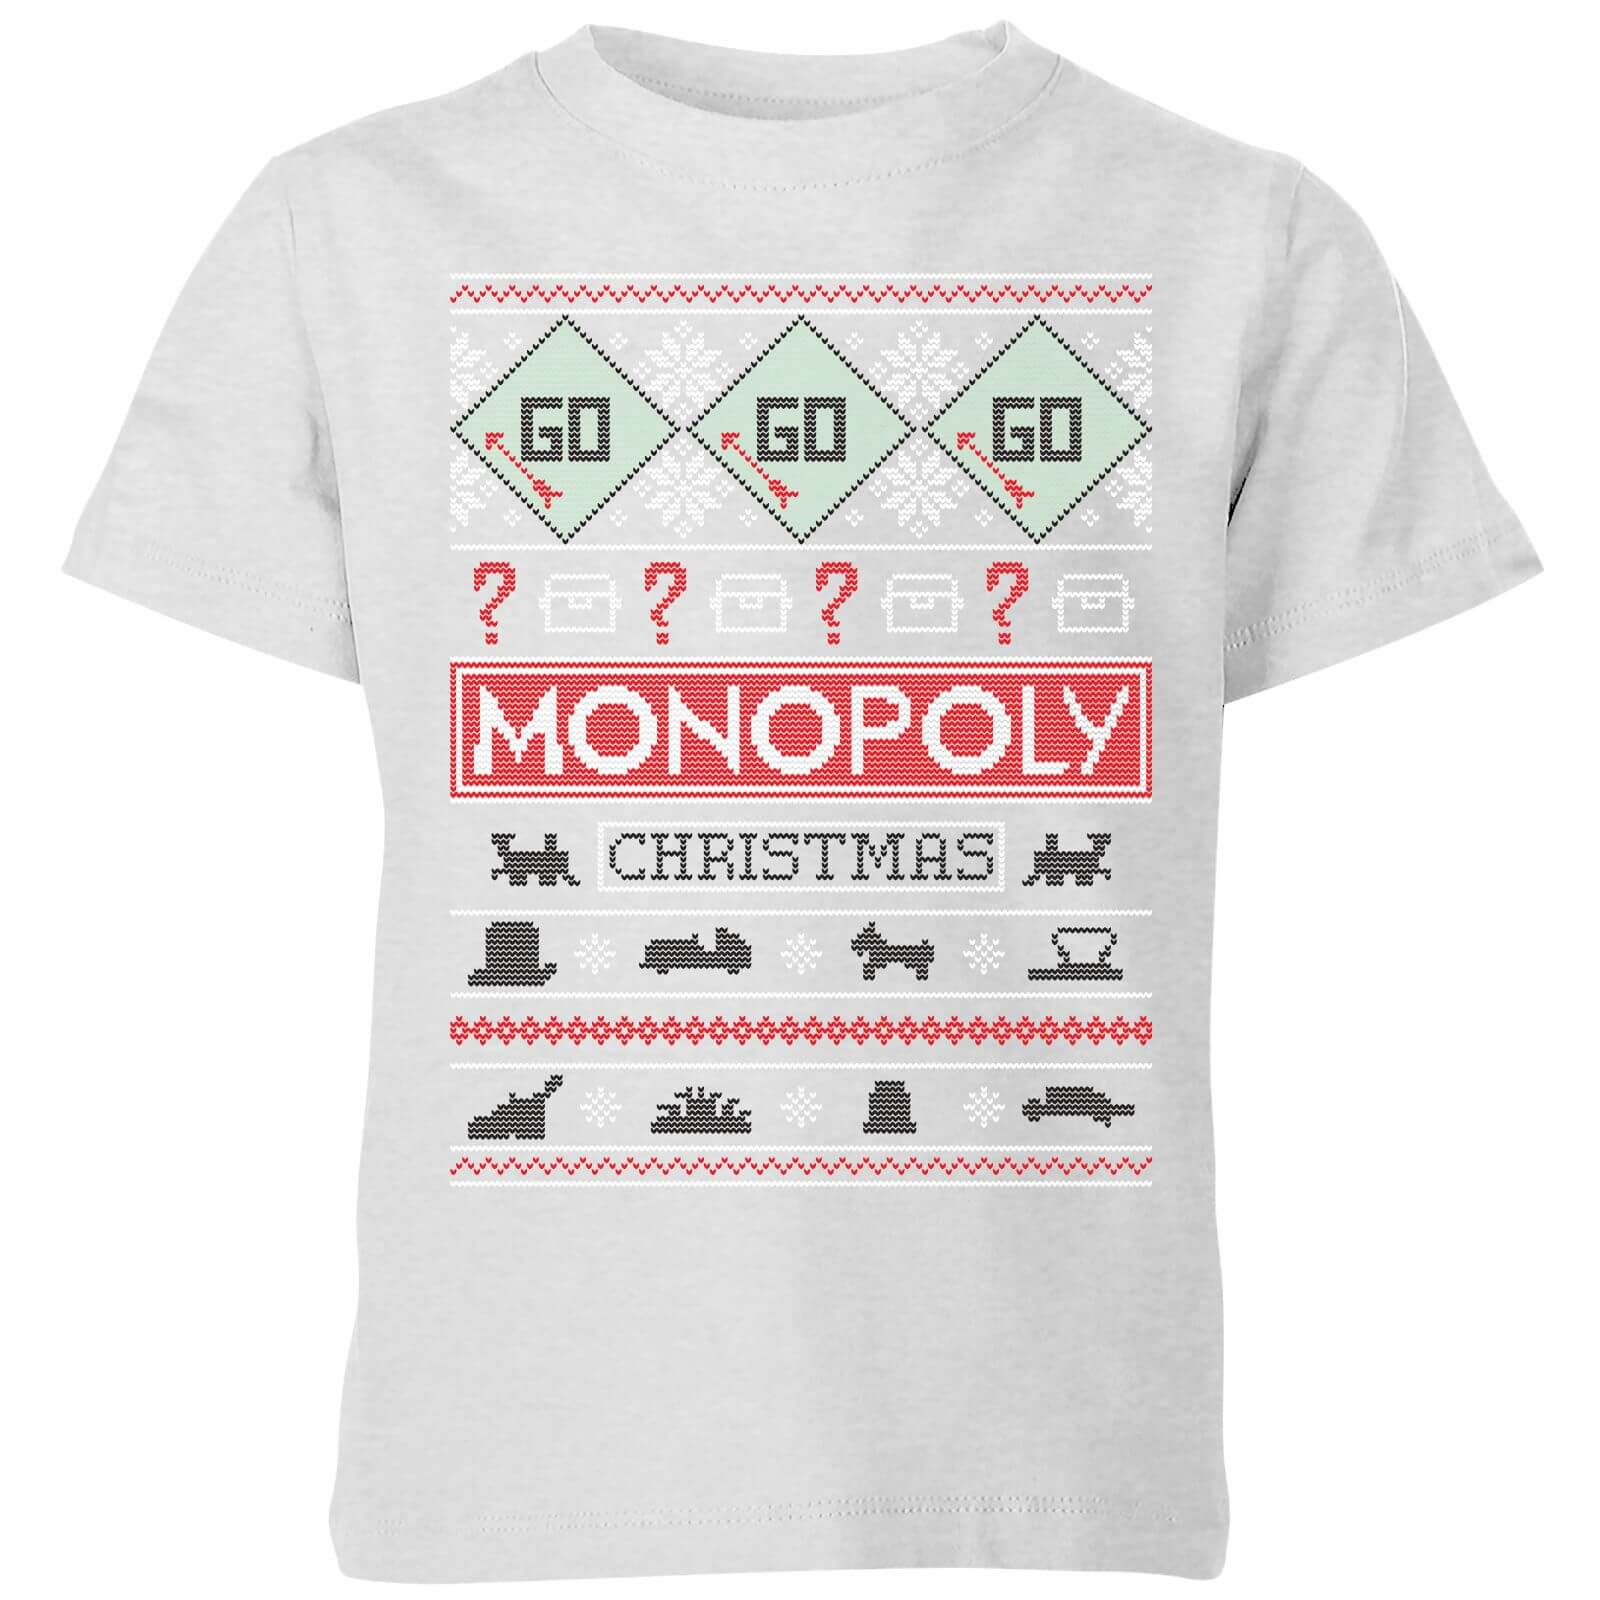 Monopoly Kids' Christmas T-Shirt - Grey - 11-12 Jahre von Original Hero